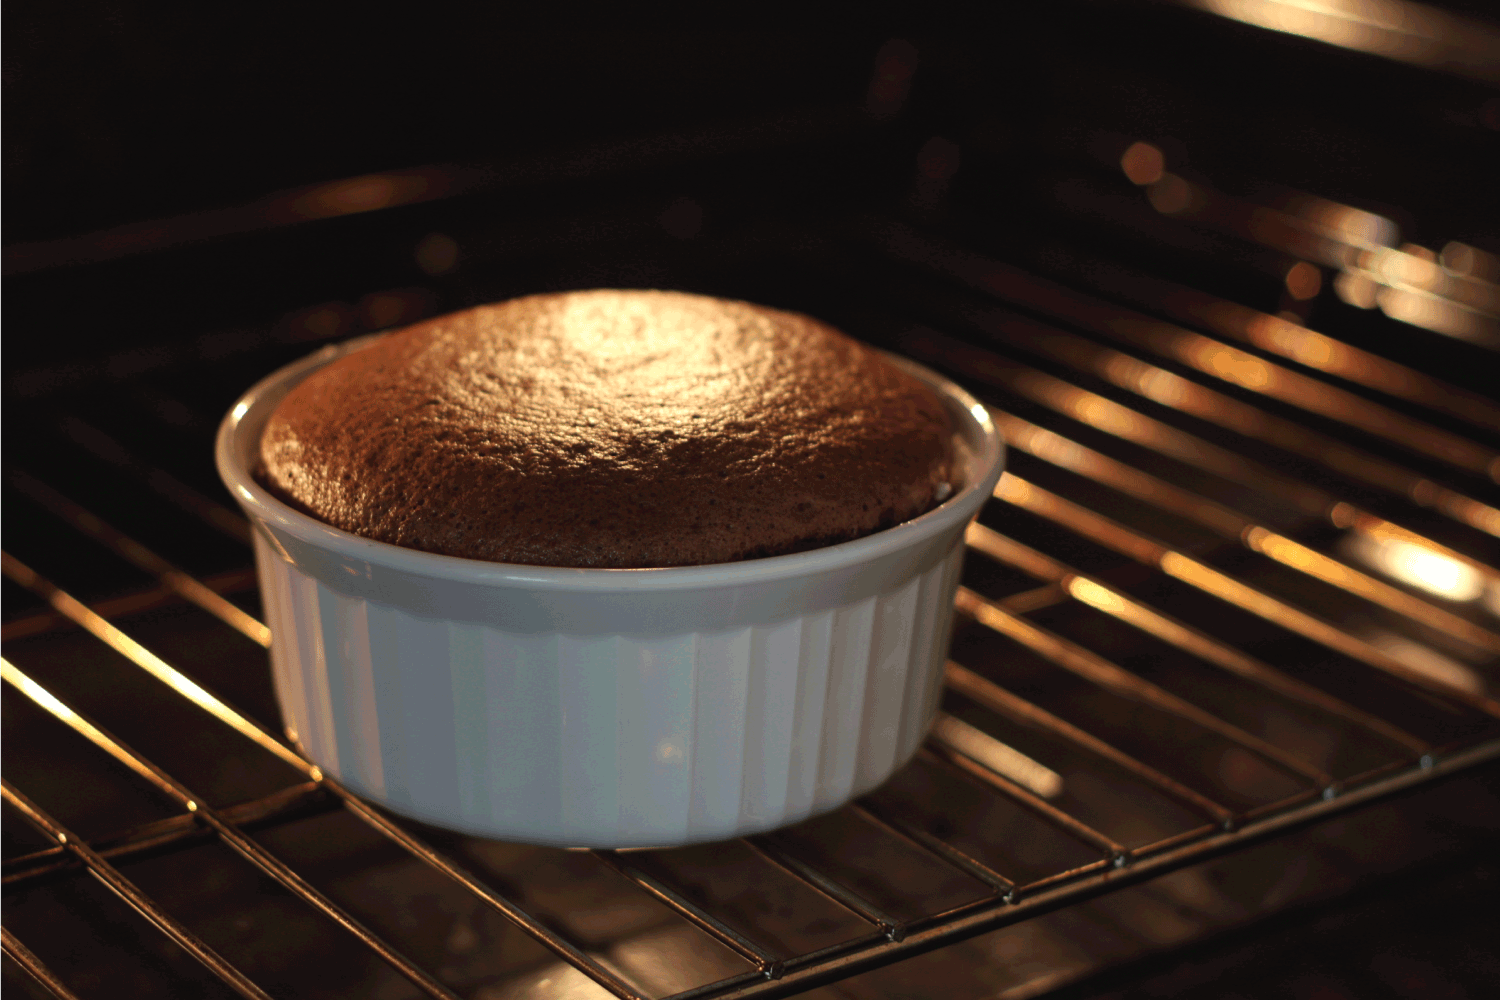 A chocolate soufle baking in a white ramekin